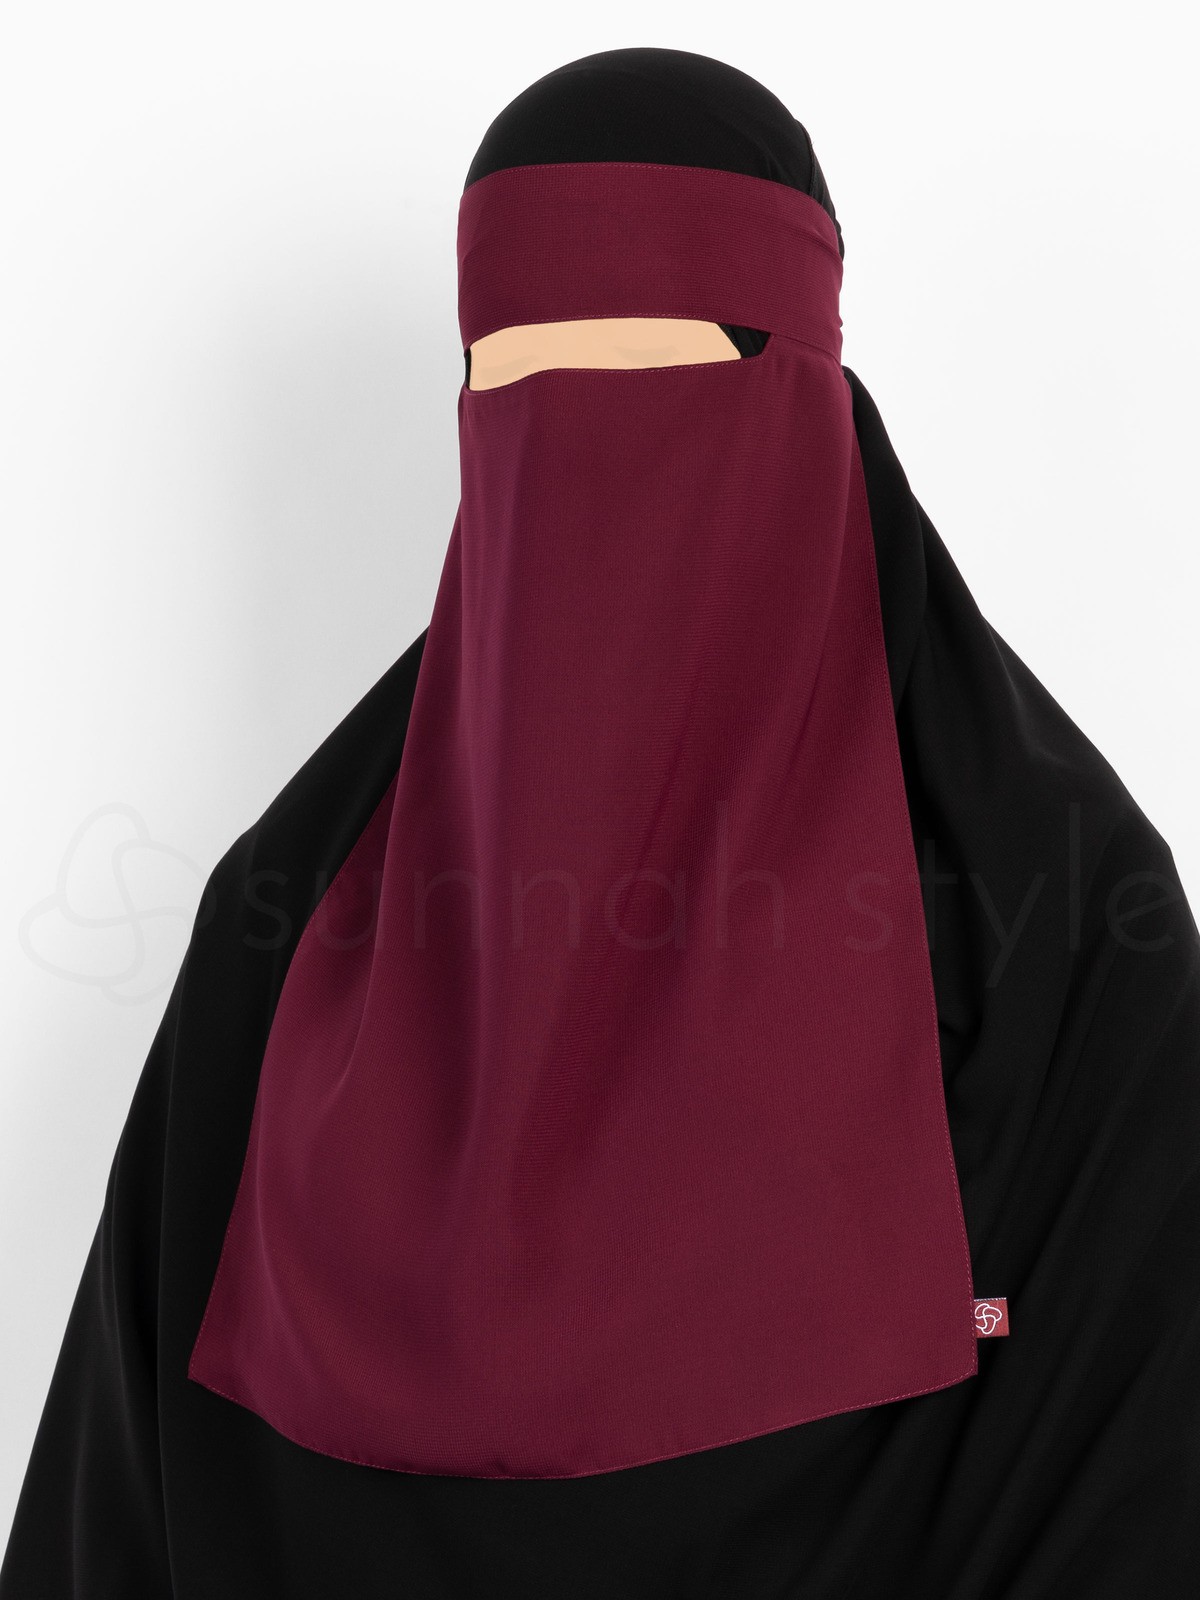 Sunnah Style - Narrow No-Pinch One Layer Niqab (Burgundy)